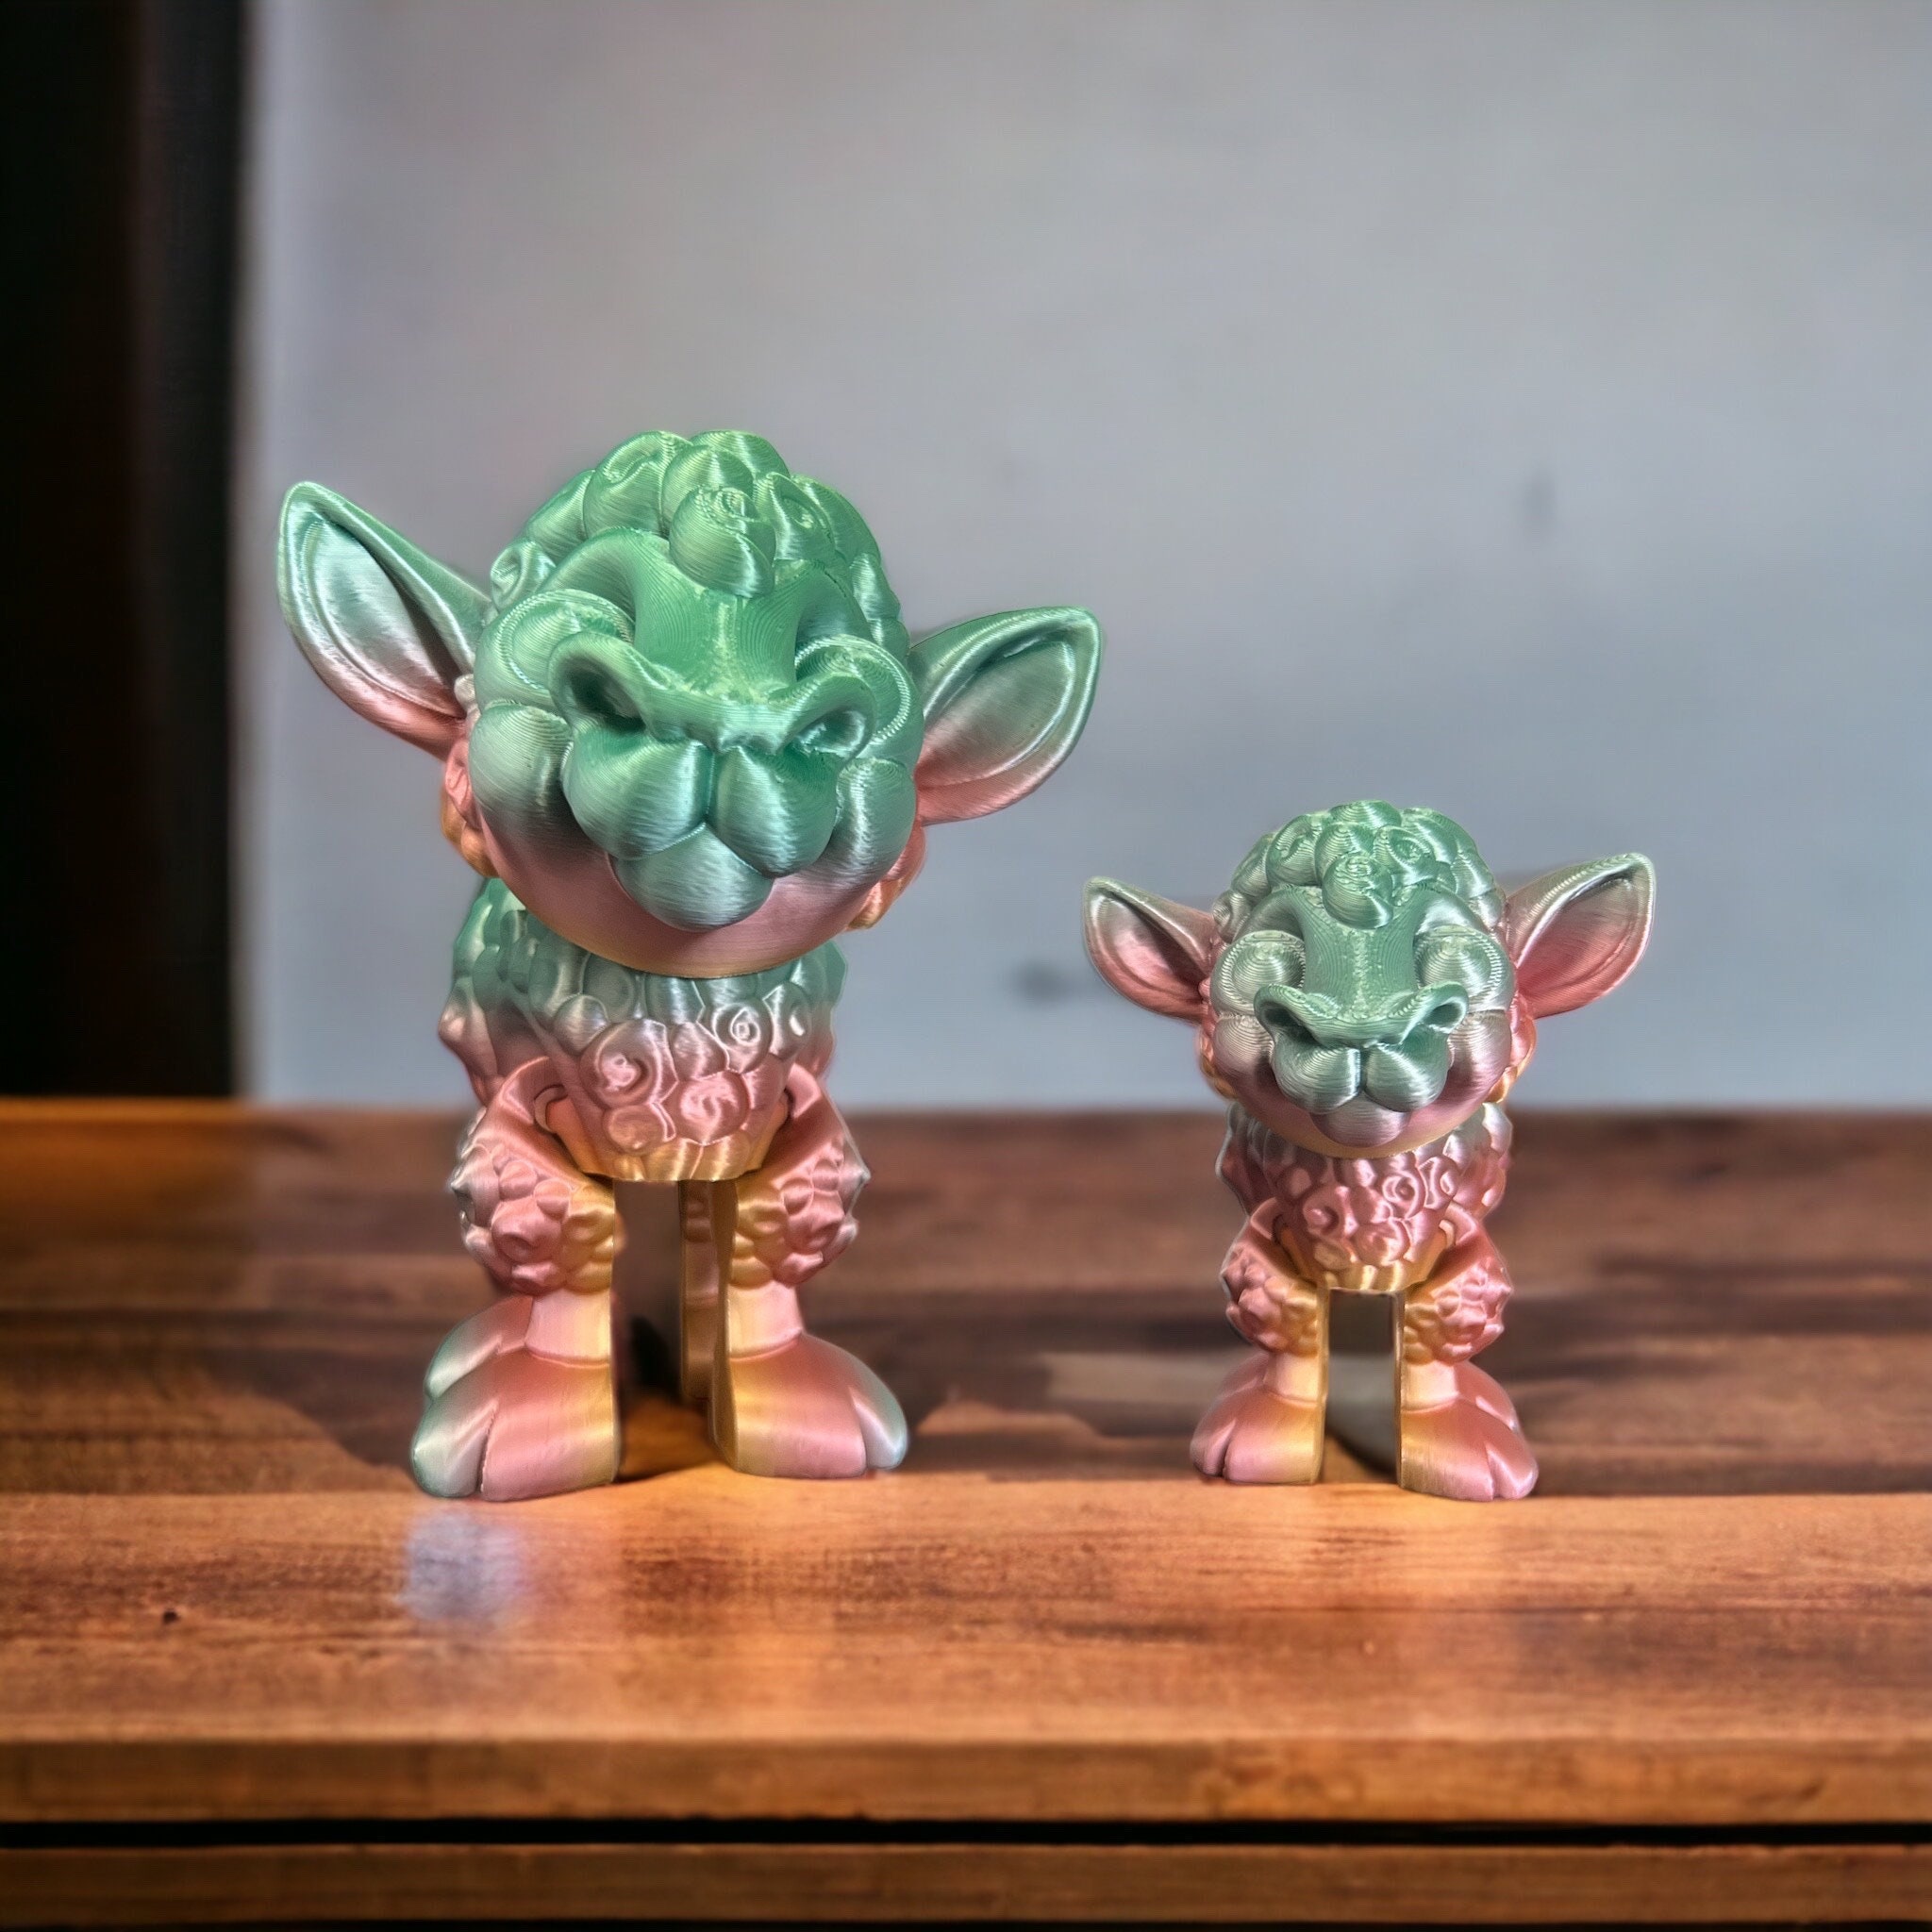 Buy Star Wars Computer Sitter Bobbleheads Set of 3 - Yoda Darth